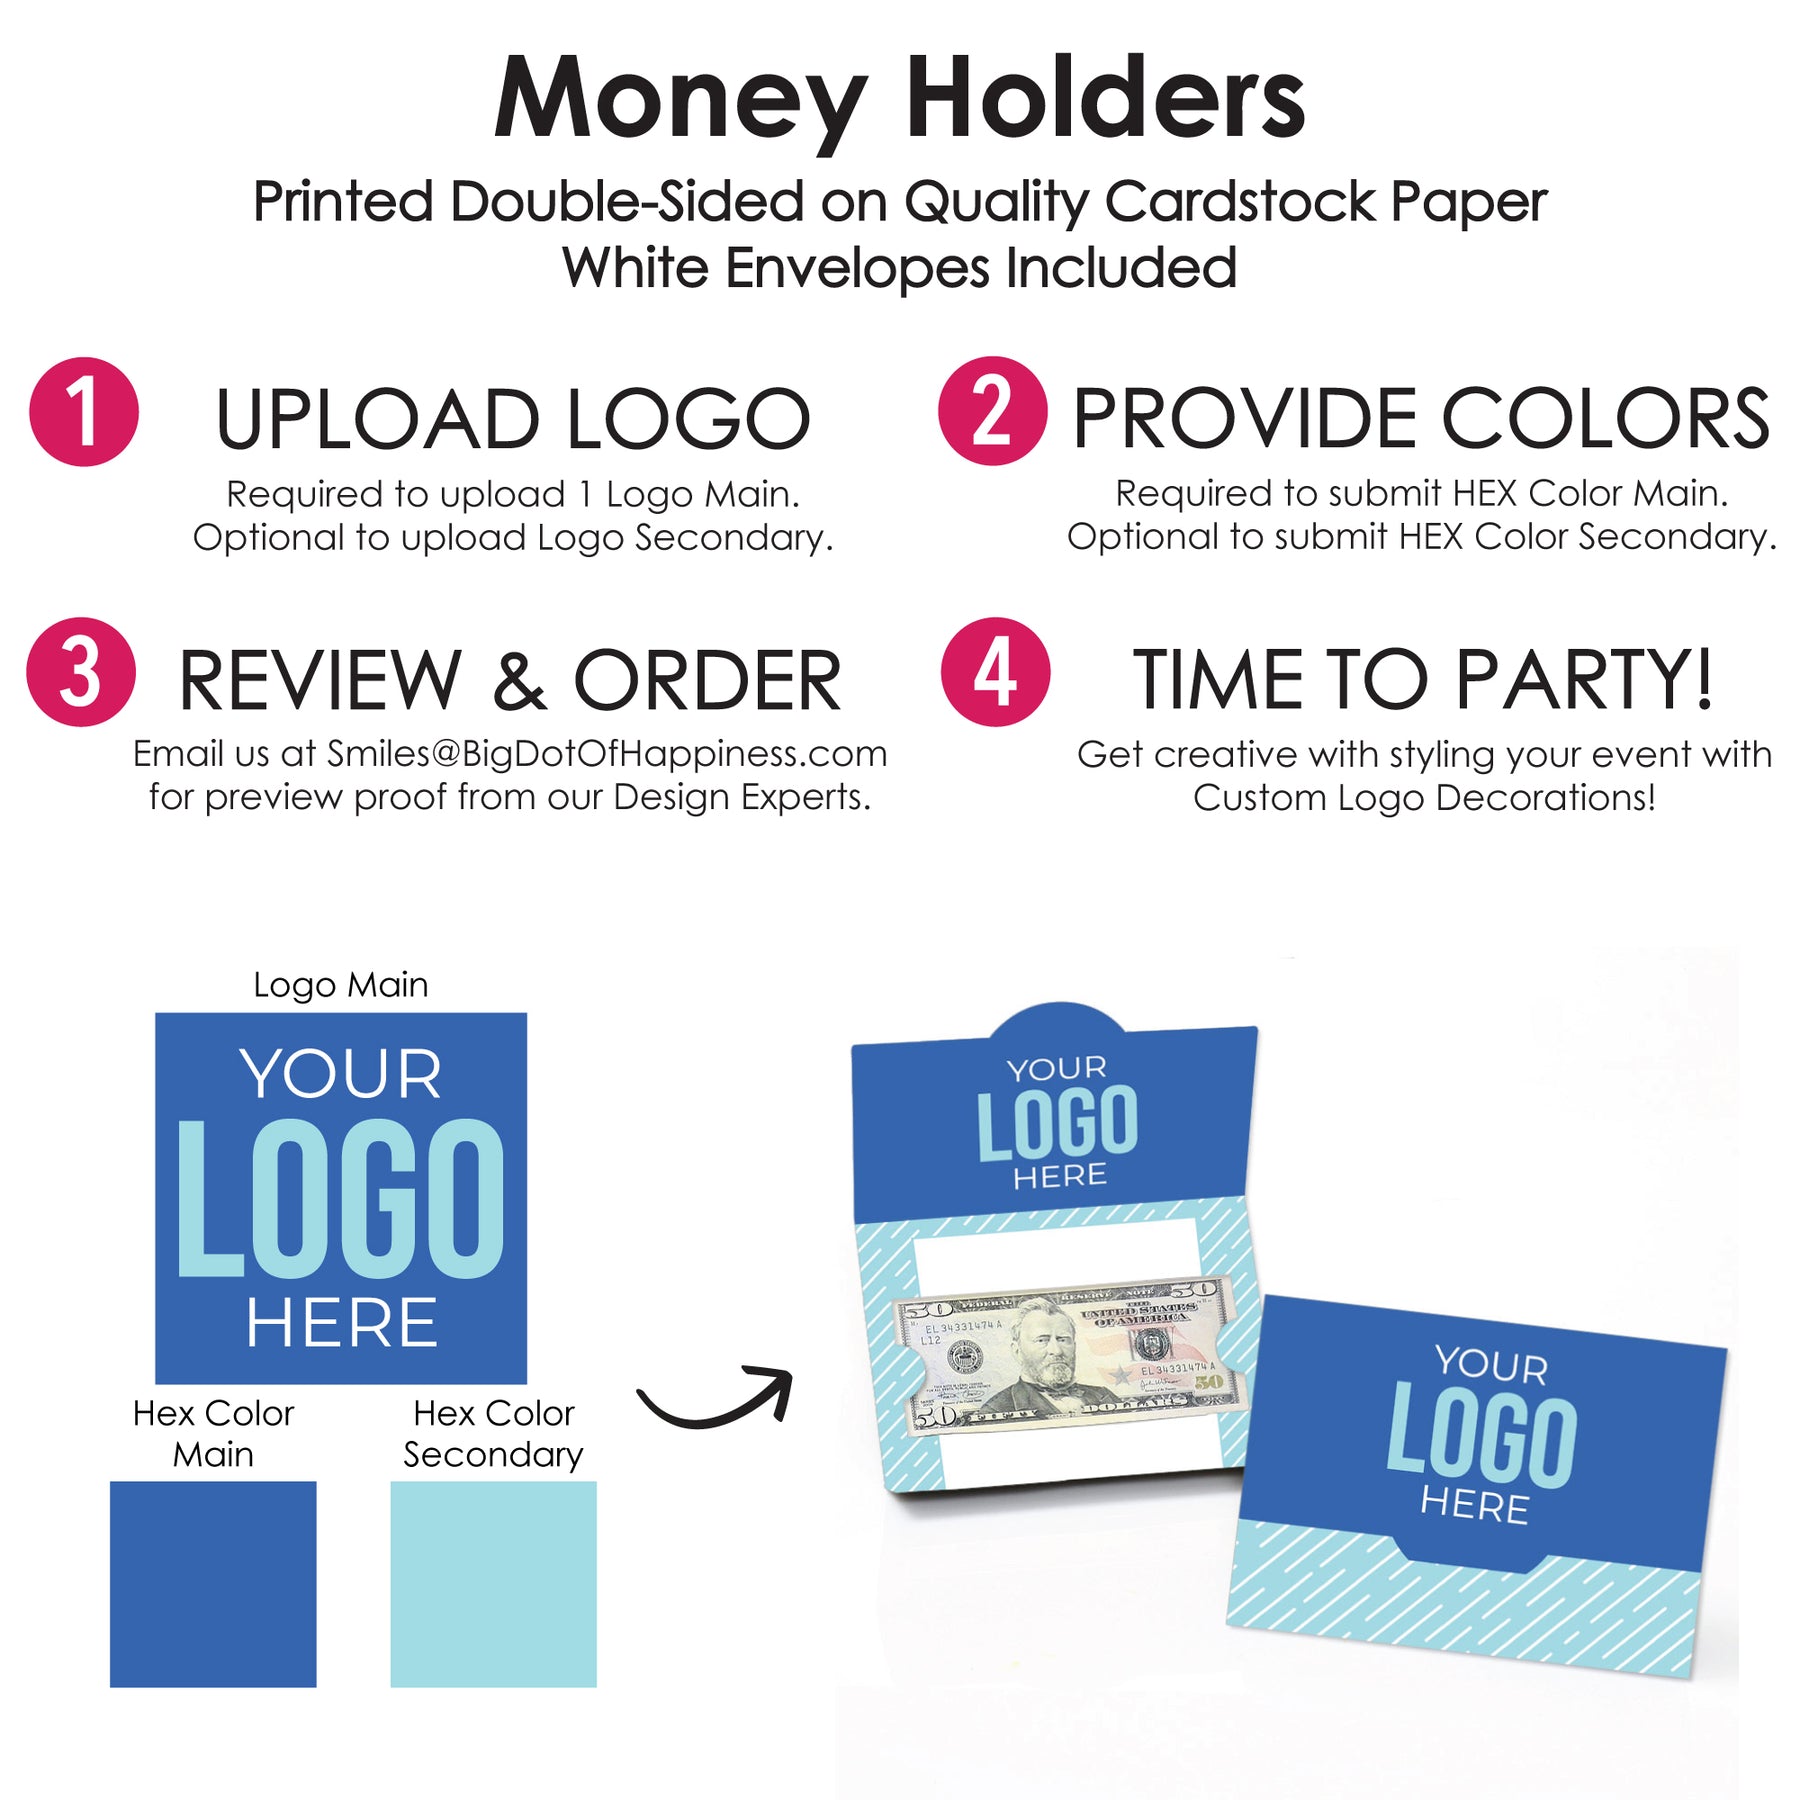 Gift Card Holders - Custom Printed in Full Color